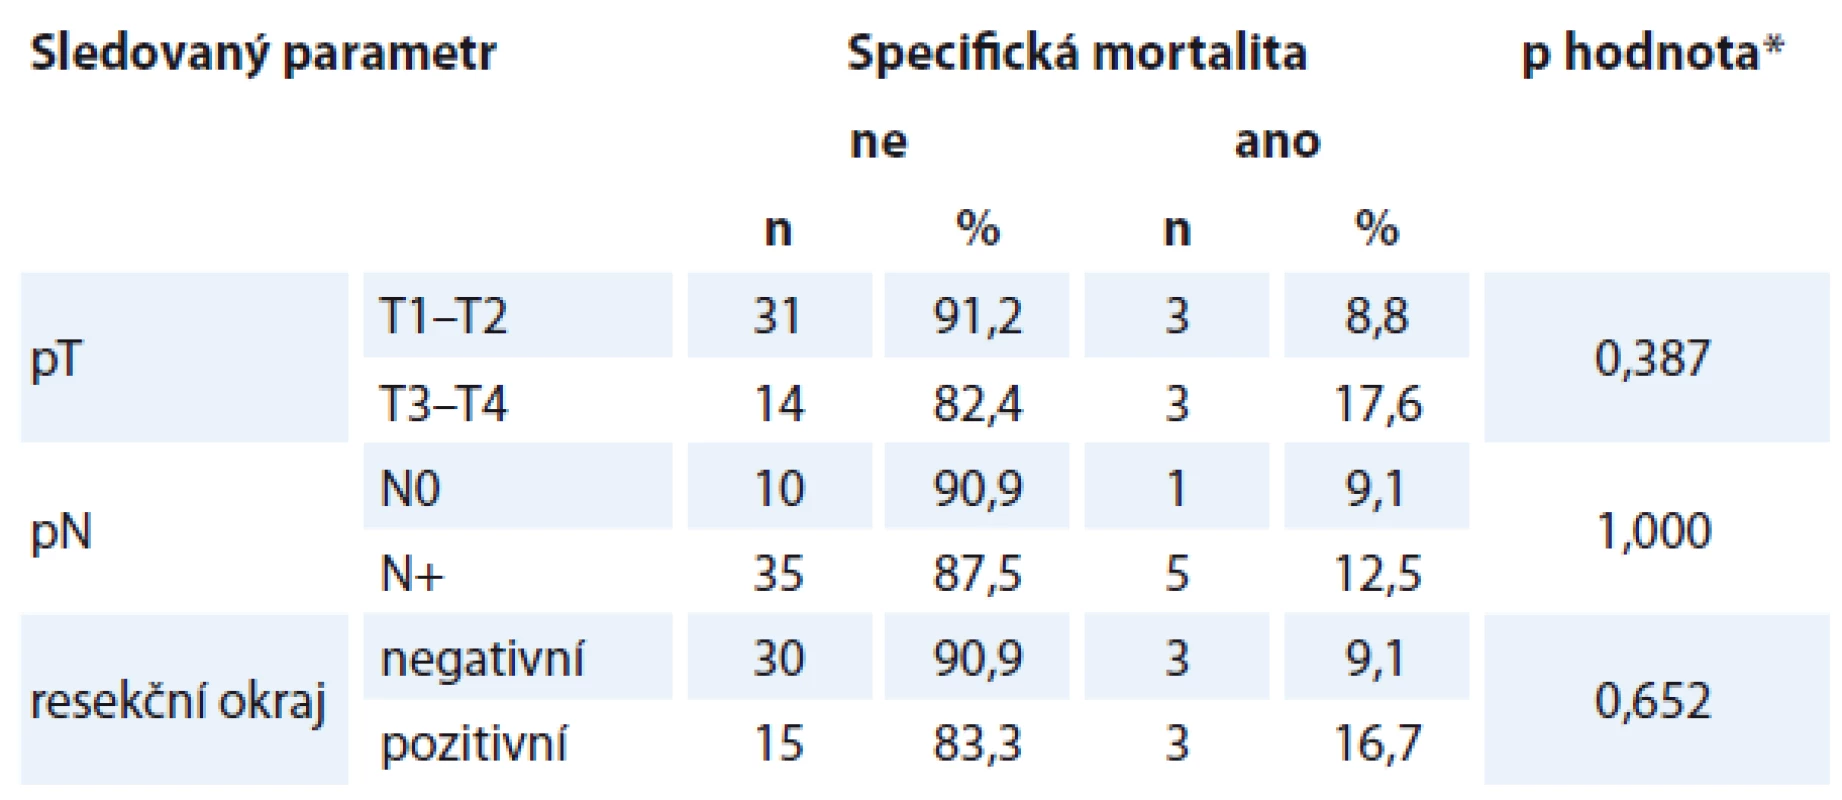 Specifická mortalita v závislosti na různých parametrech.